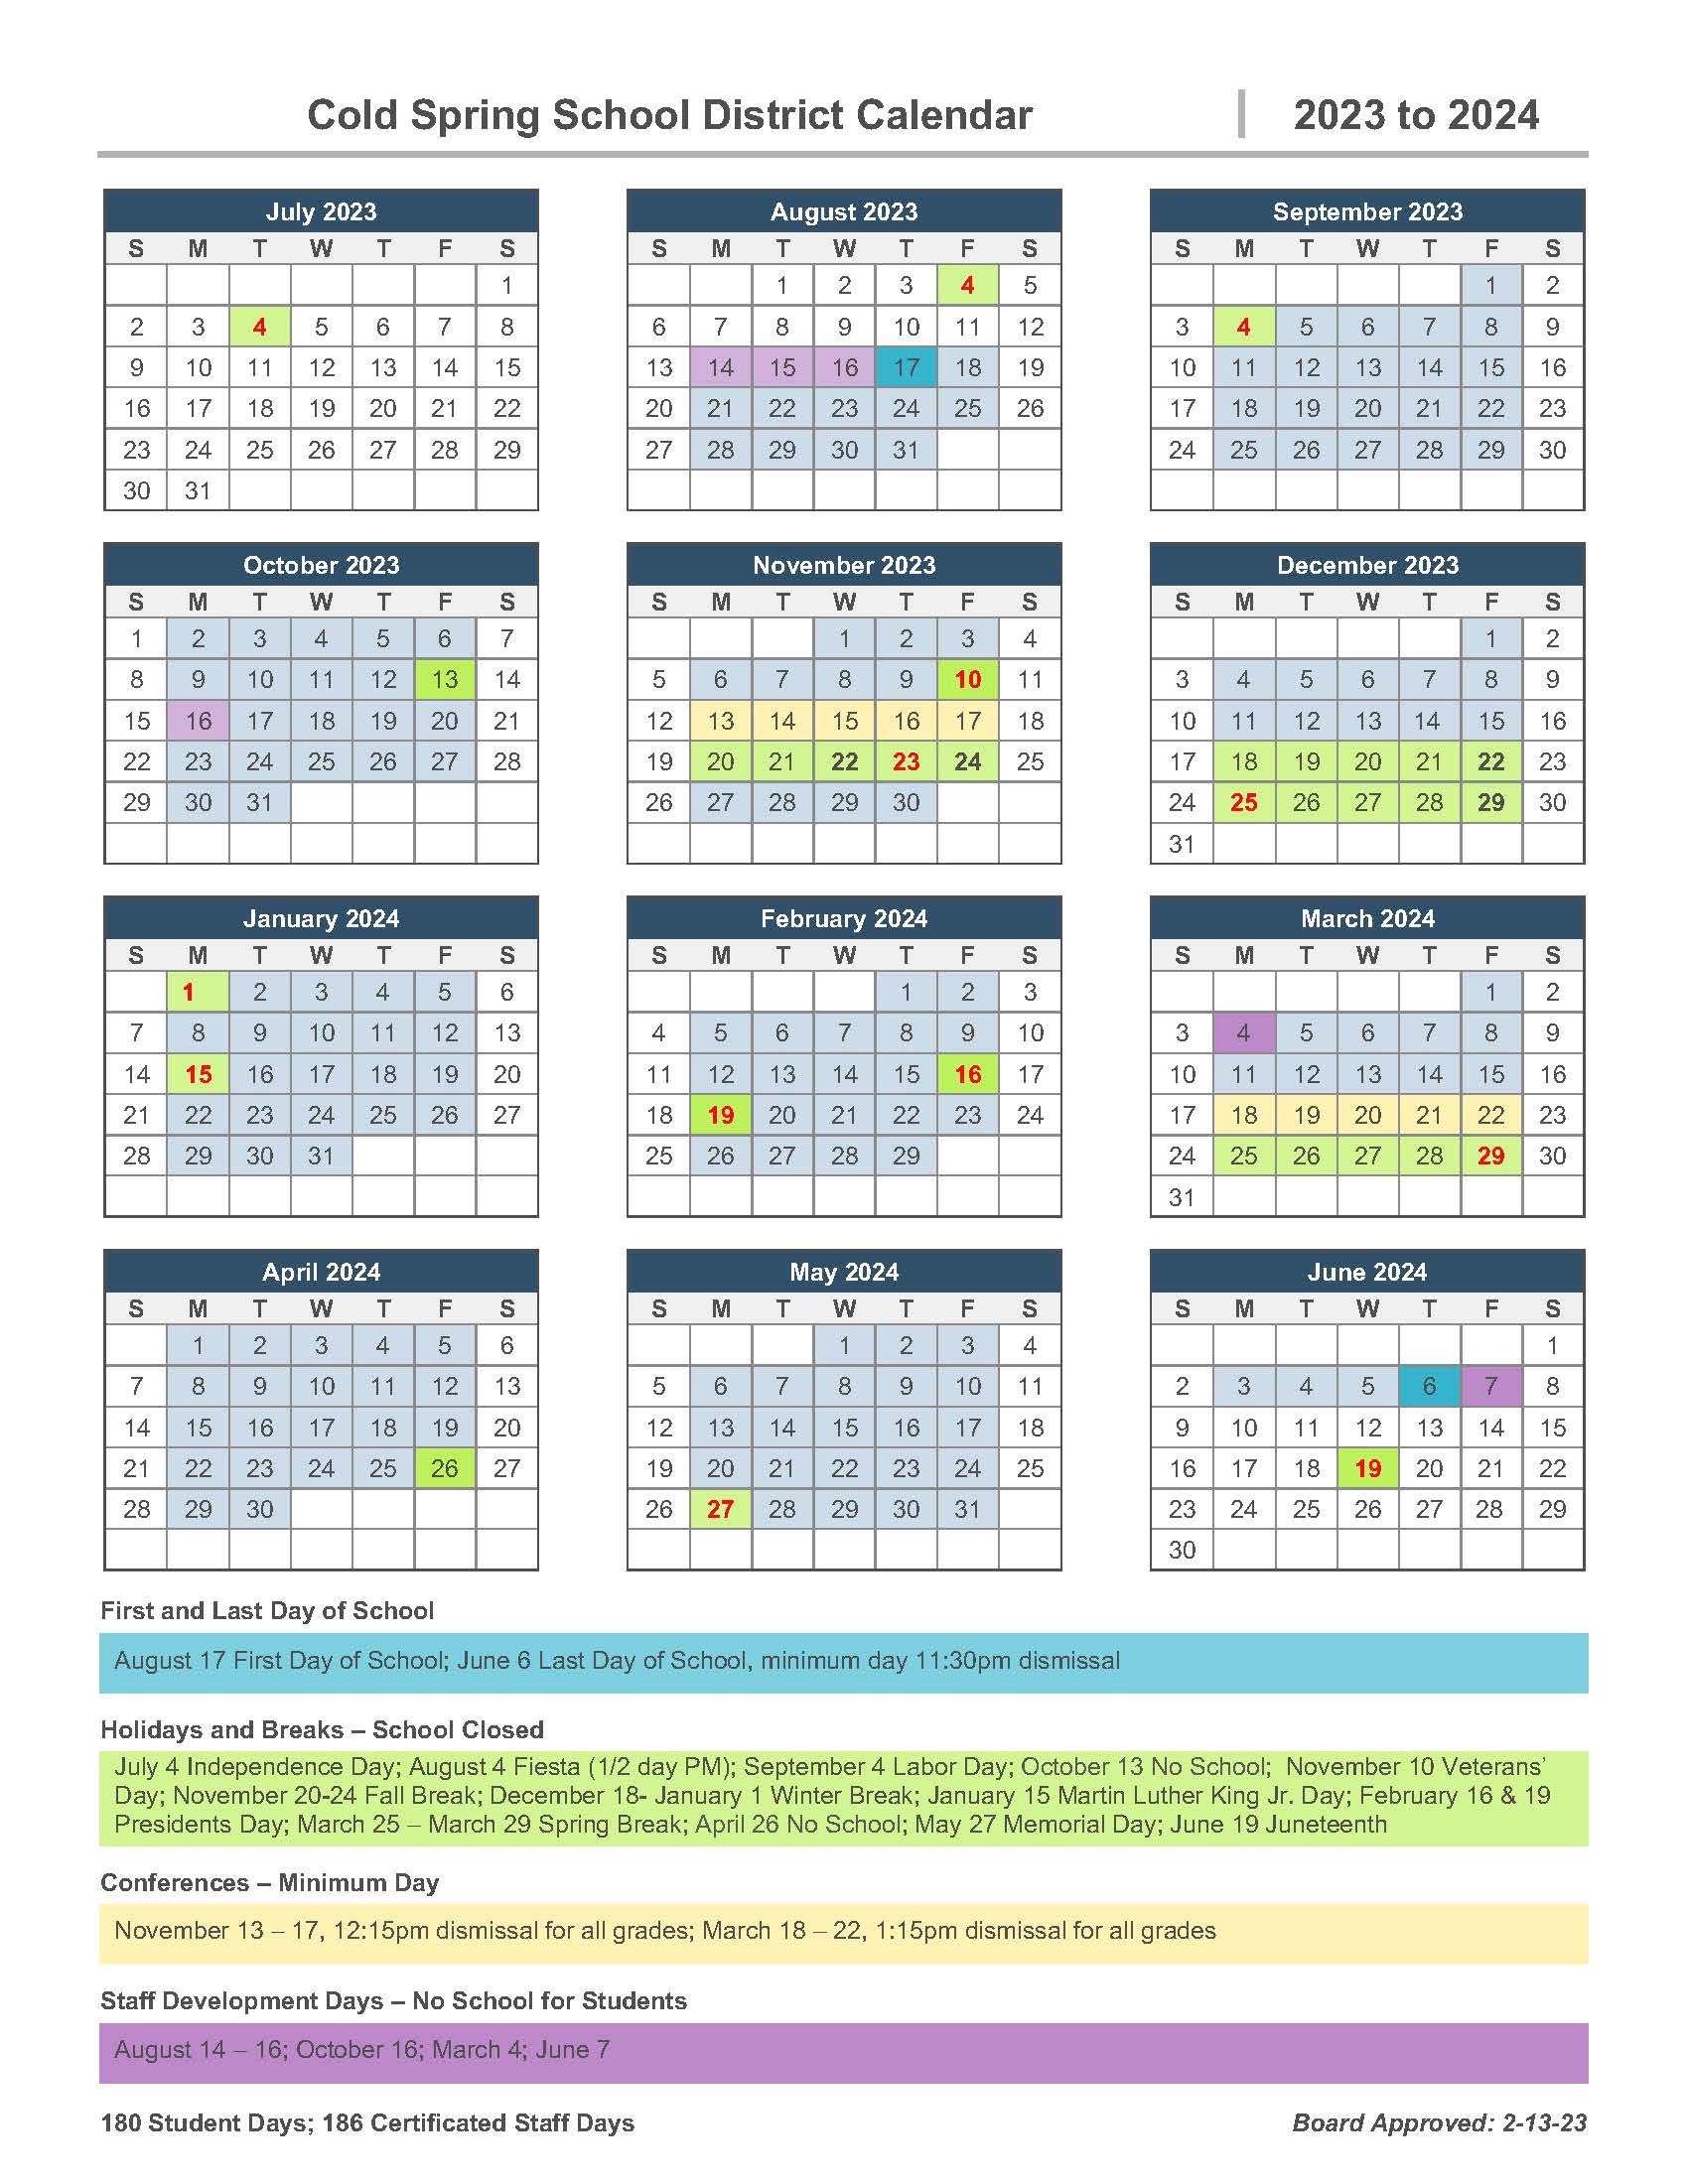 District Calendar 2023-24